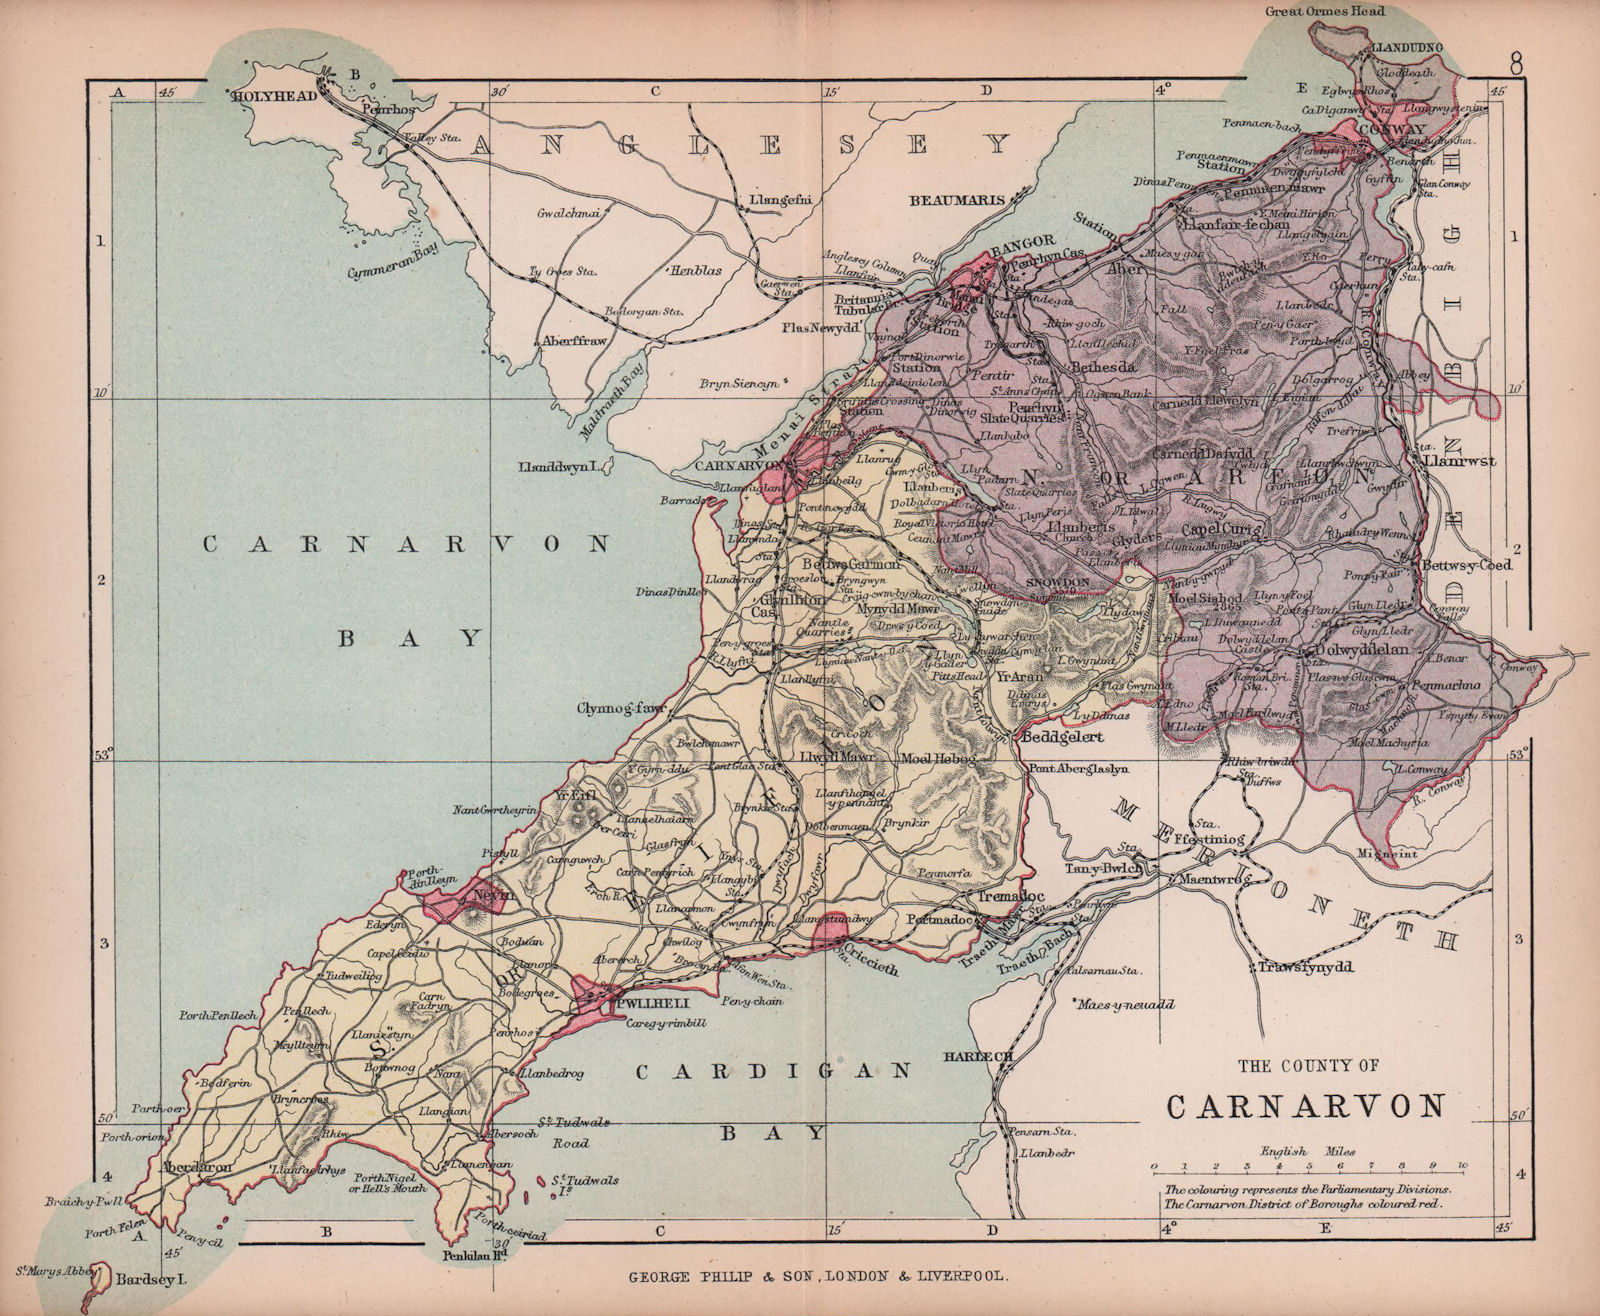 Associate Product CAERNARFONSHIRE "County of Carnarvon" Bangor Conwy Wales BARTHOLOMEW 1882 map